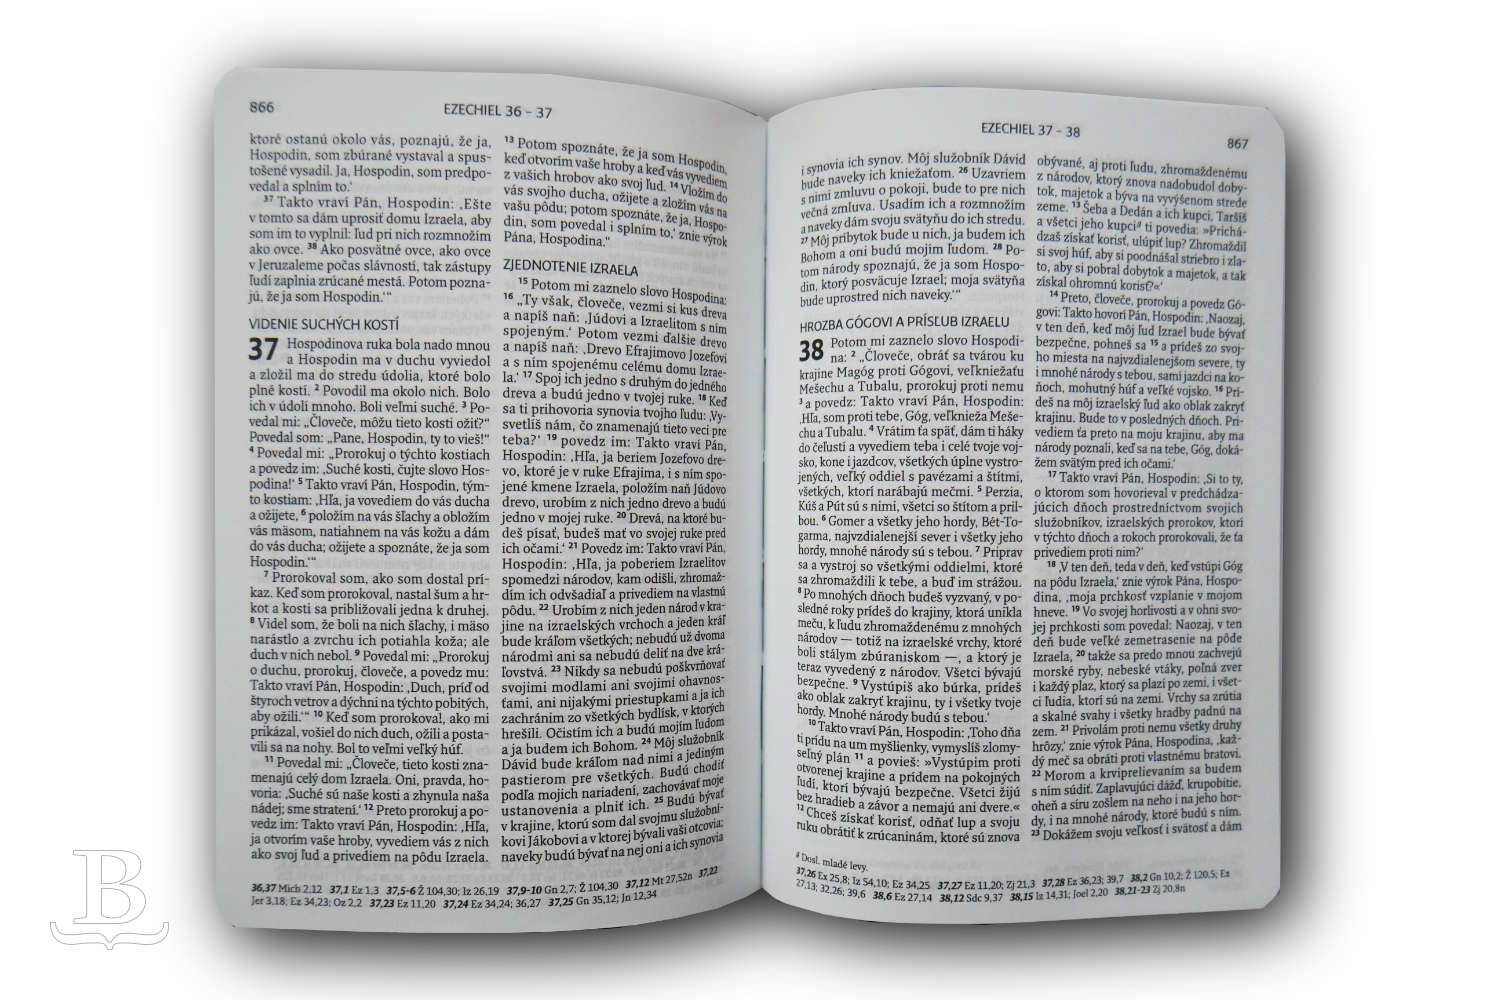 Biblia slovenská, ekumenický preklad s DT, vreckový formát, sivá, 2018